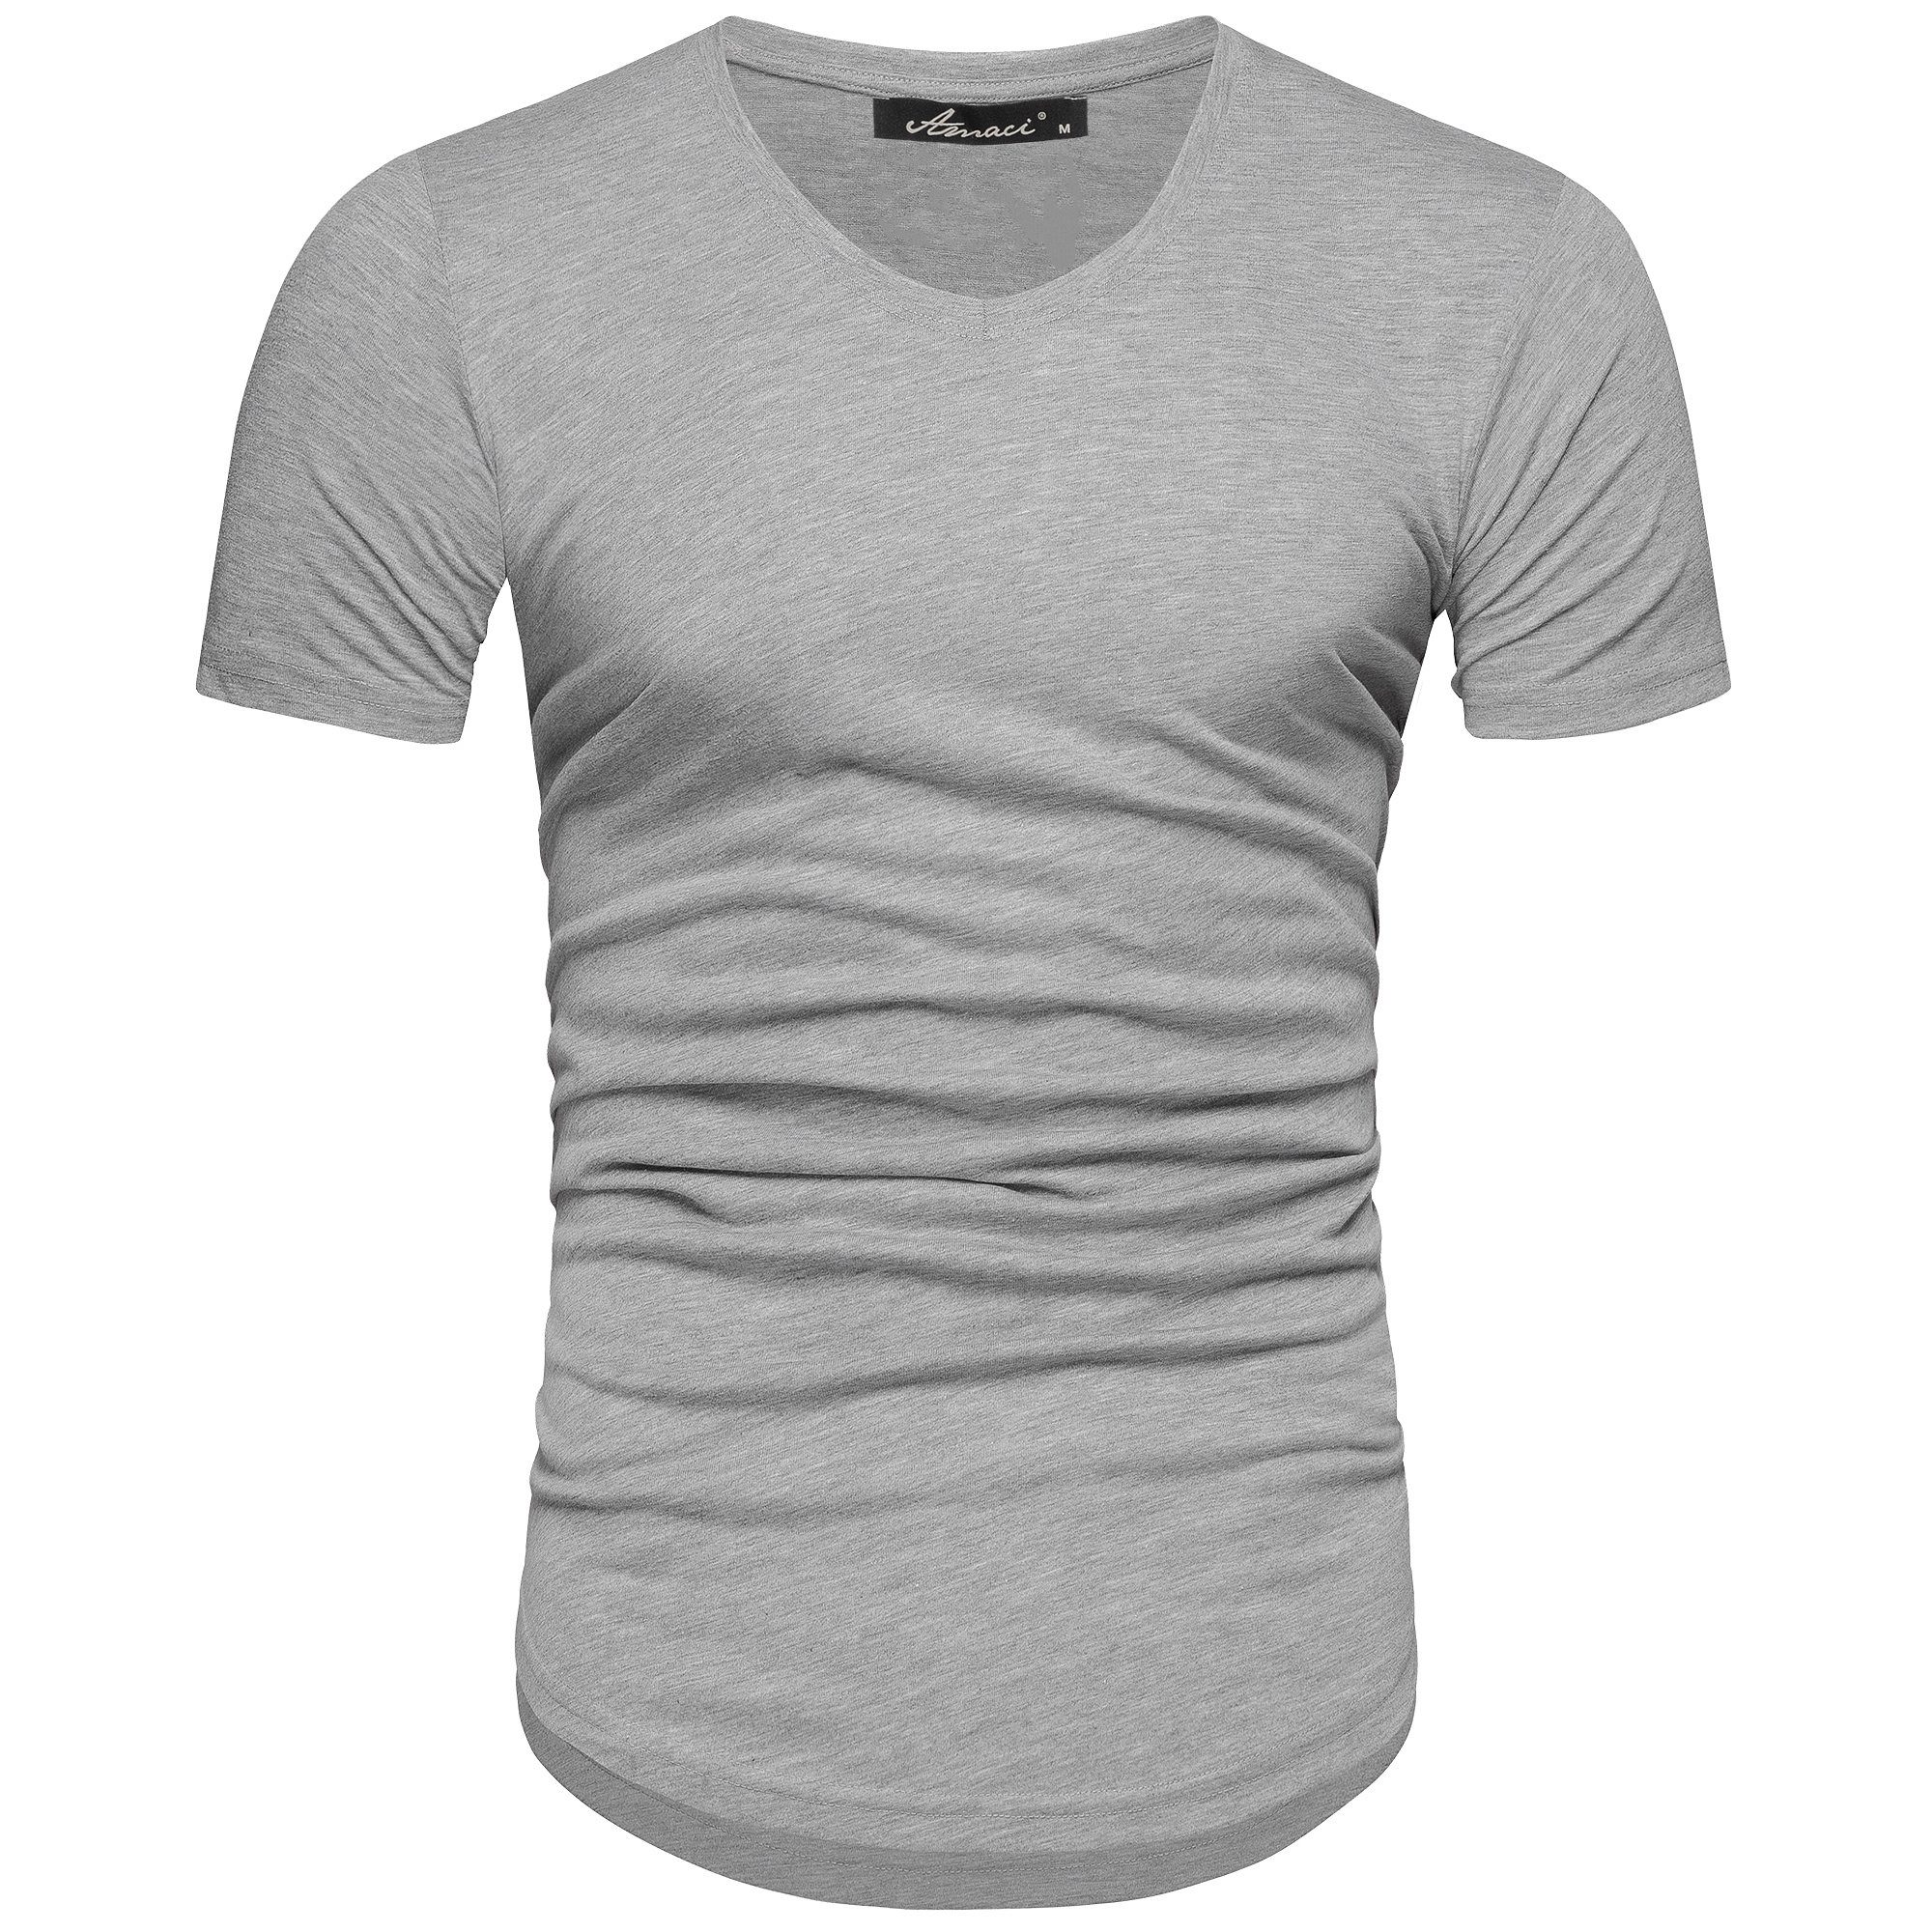 Amaci&Sons T-Shirt BELLEVUE Basic Oversize T-Shirt mit V-Ausschnitt Herren Oversize Vintage V-Neck Basic V-Ausschnitt Shirt Grau Melange